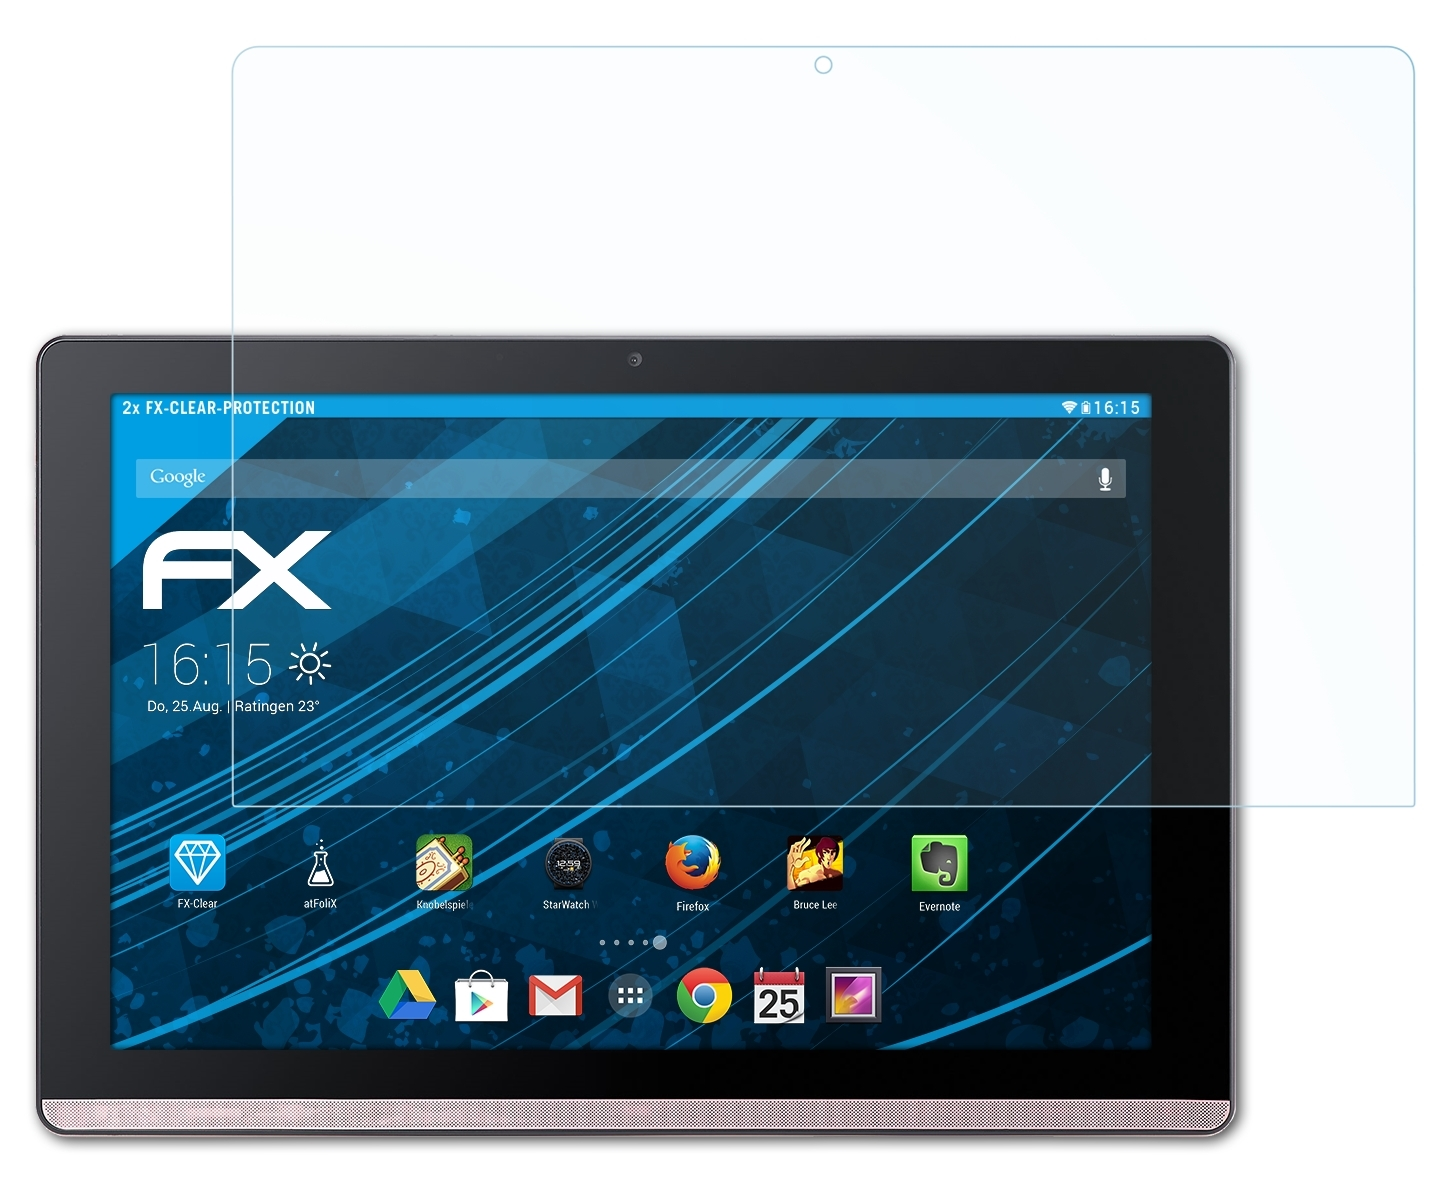 ATFOLIX 2x 10 Displayschutz(für (B3-A50)) FX-Clear Acer One Iconia